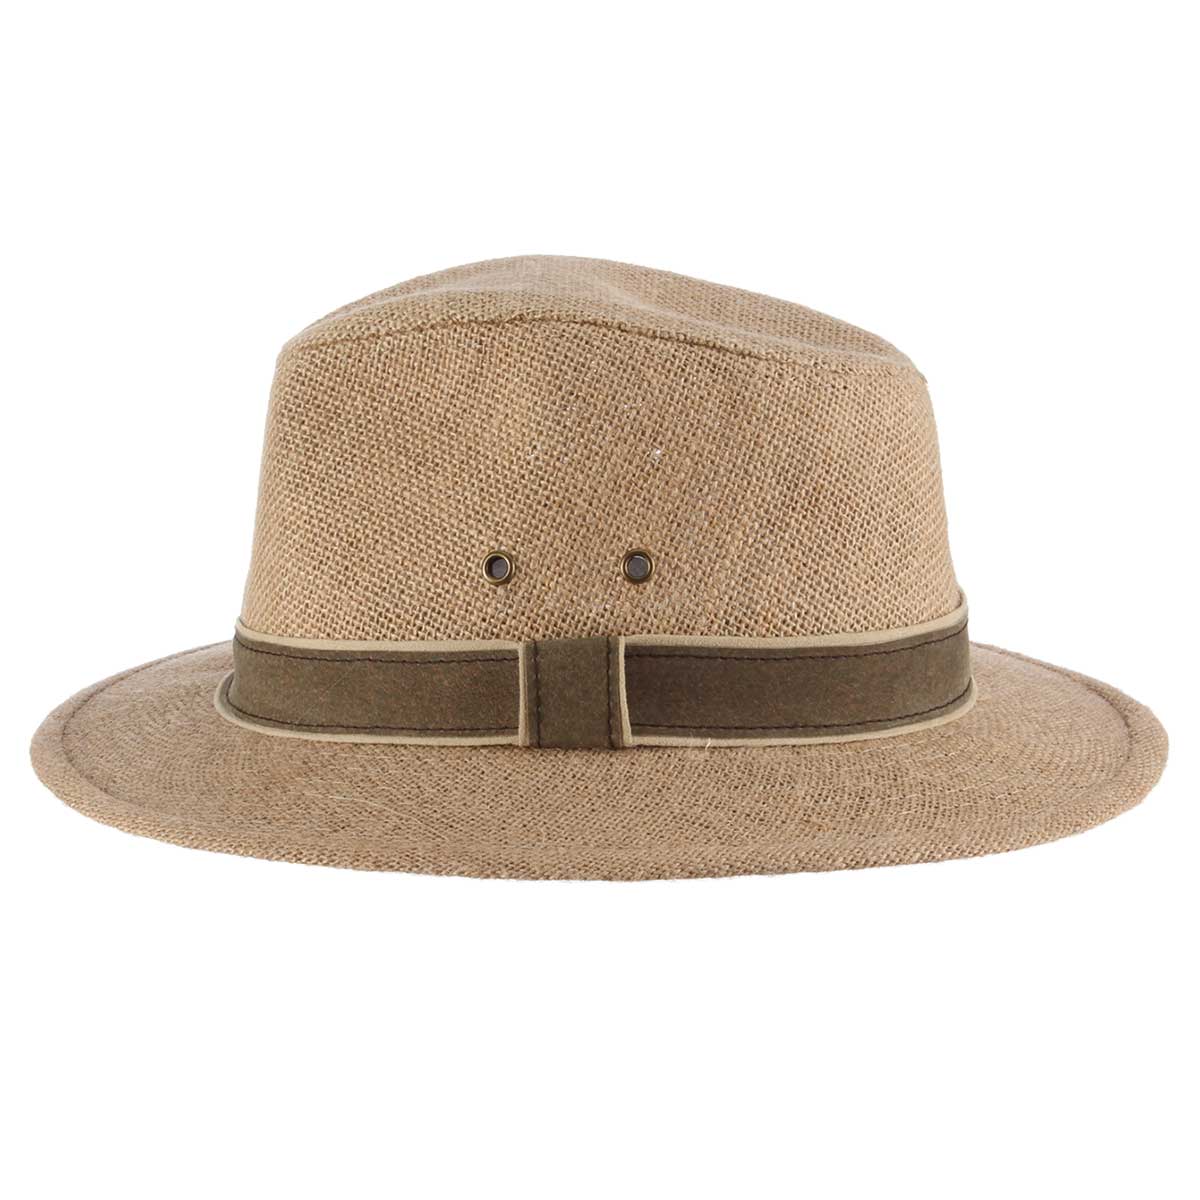 Hemp Safari Hat with 2 1/4" Brim